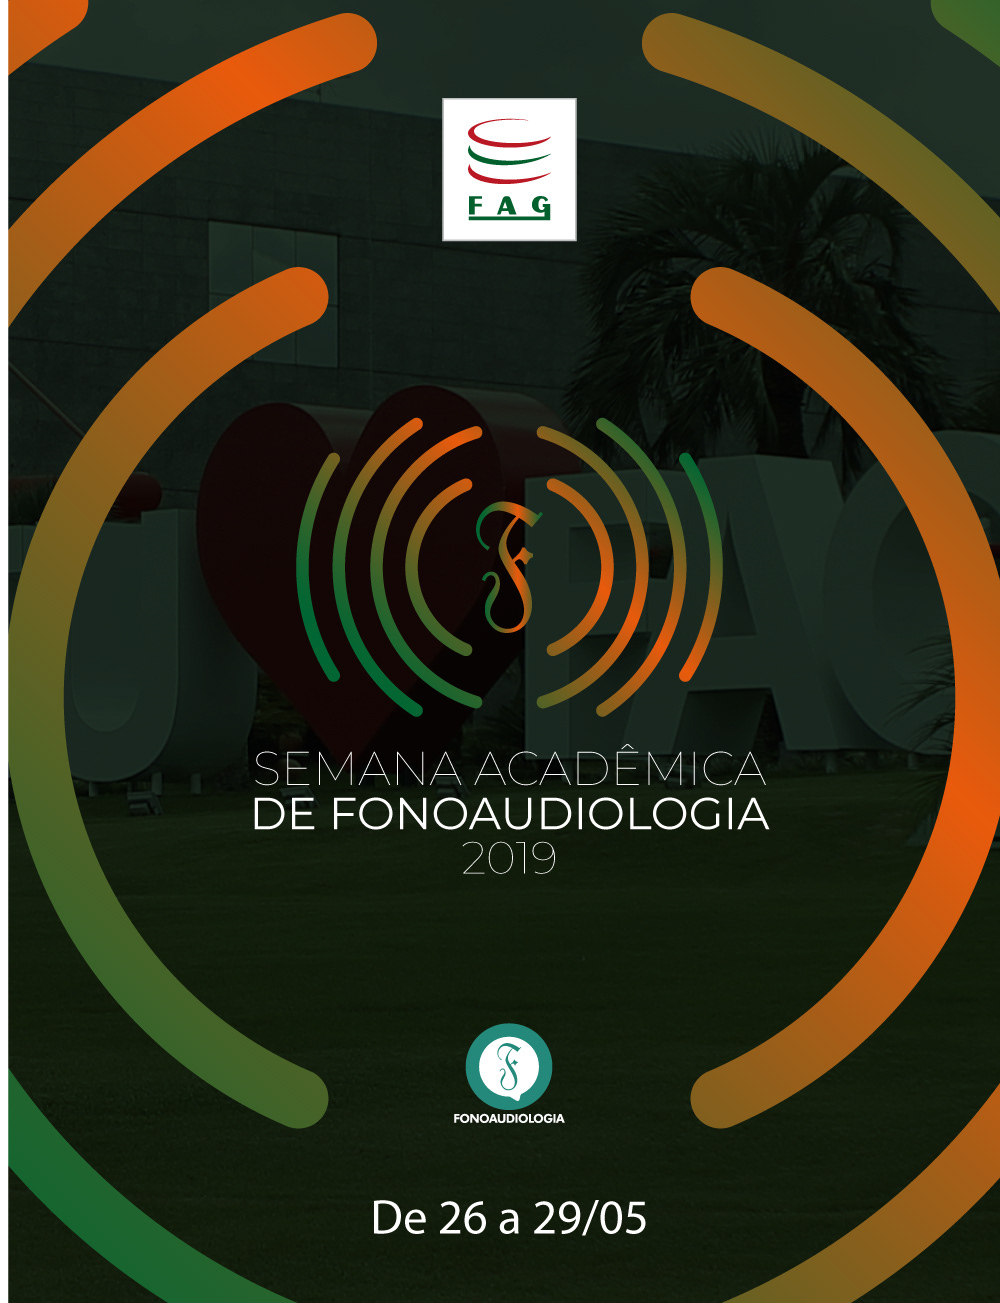 banner post informar divulgar informativo Semana académica Semana académica fonoaudiologia Fono Fag